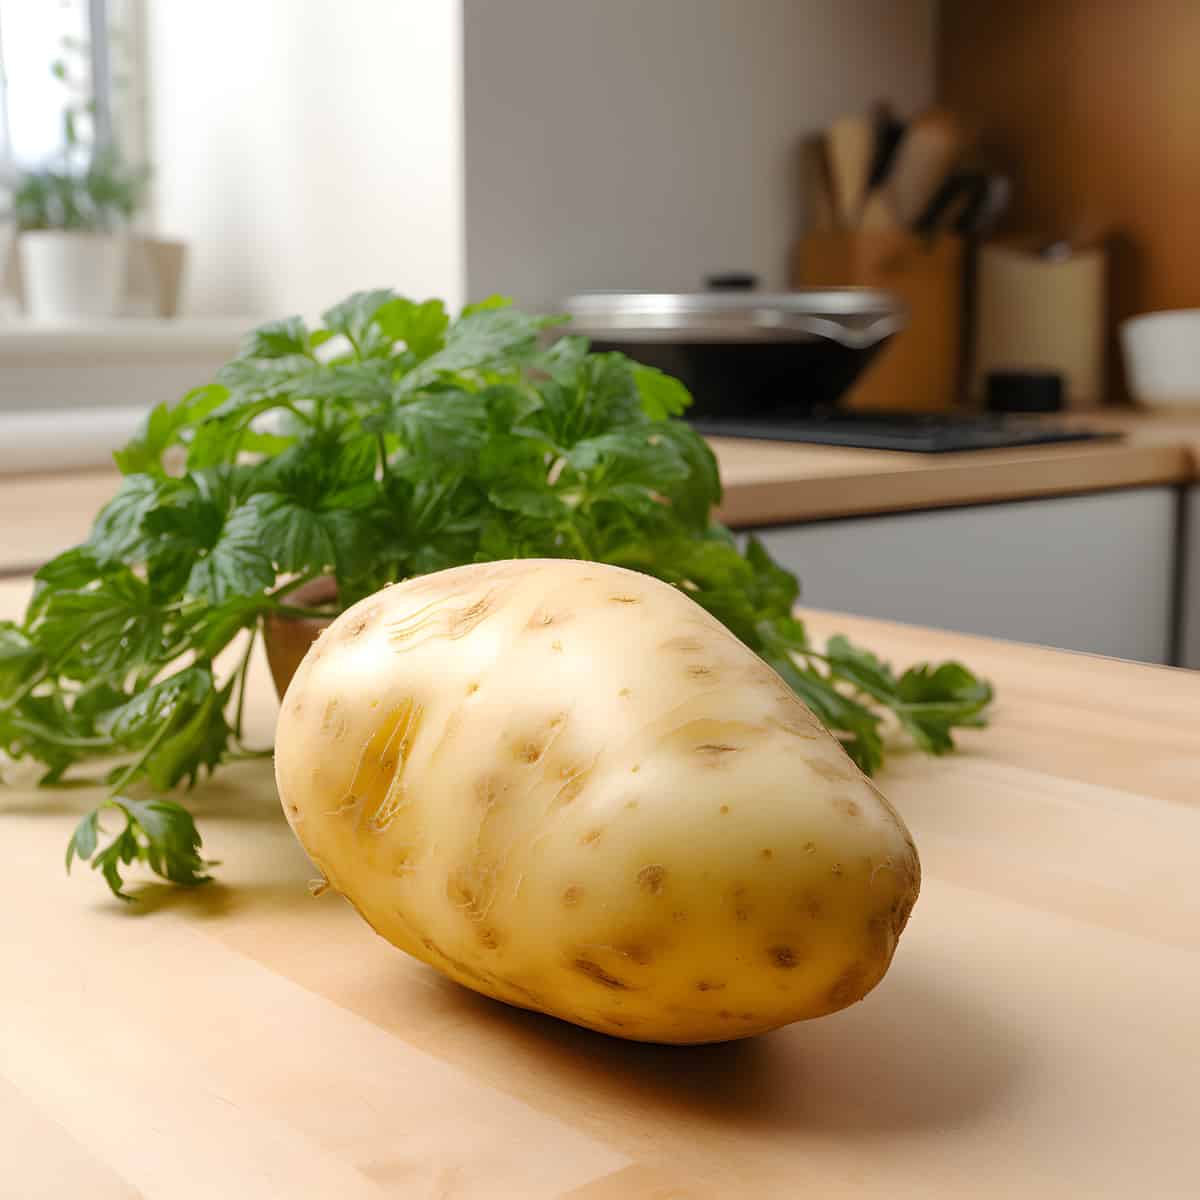 Champion Potatoes on a kitchen counter